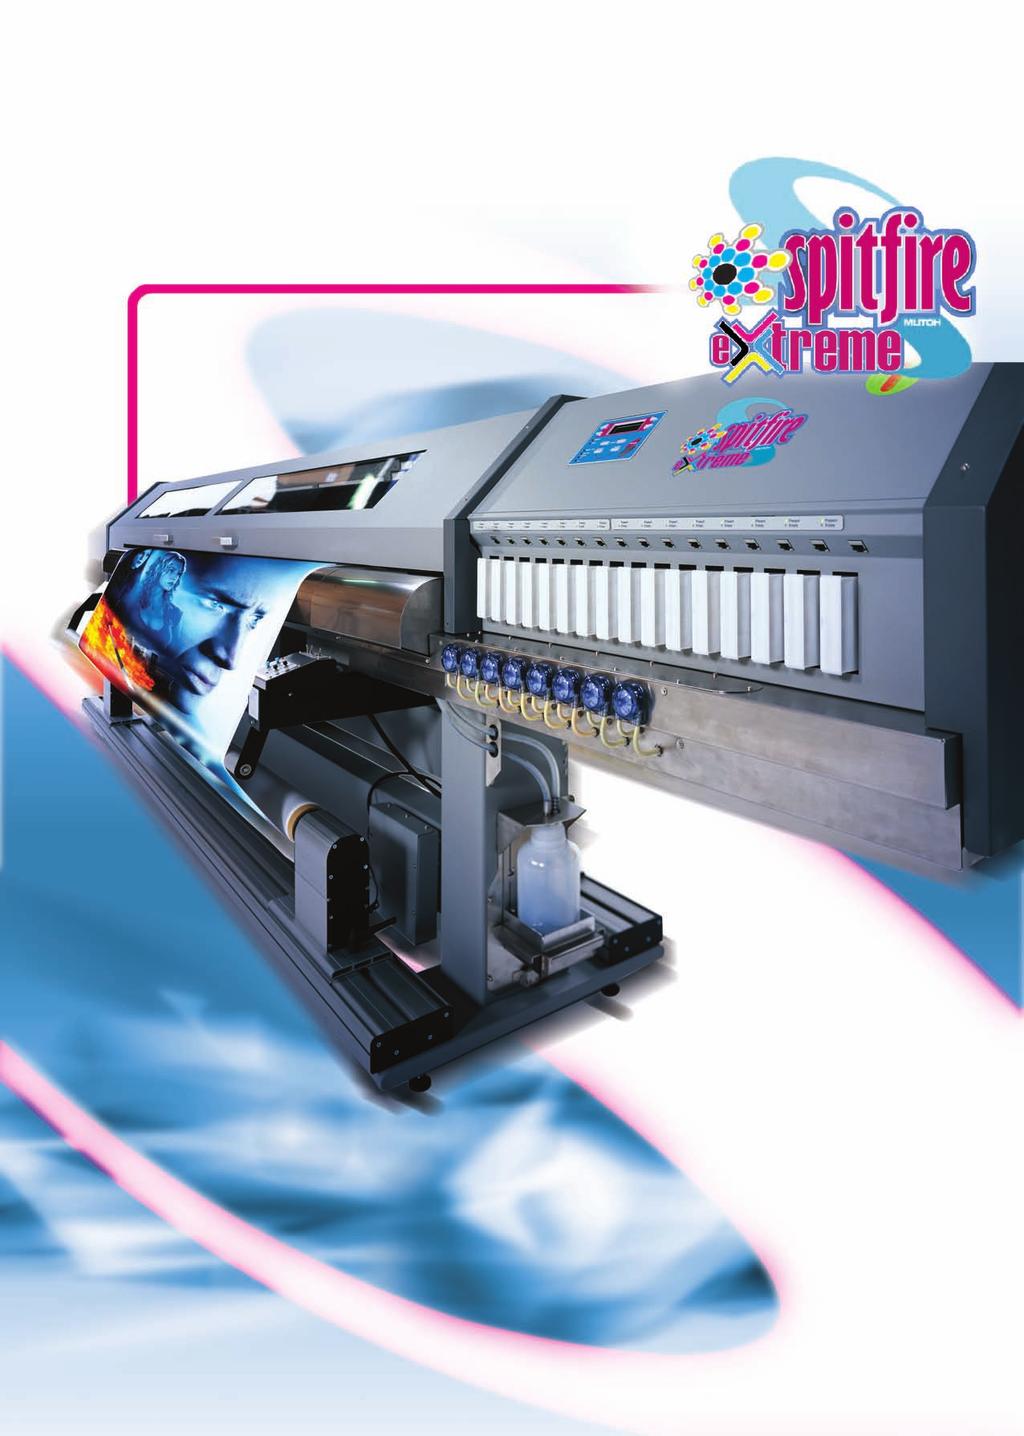 Spitfire 100 Extreme Mild Solvent Printer Extreme speed,